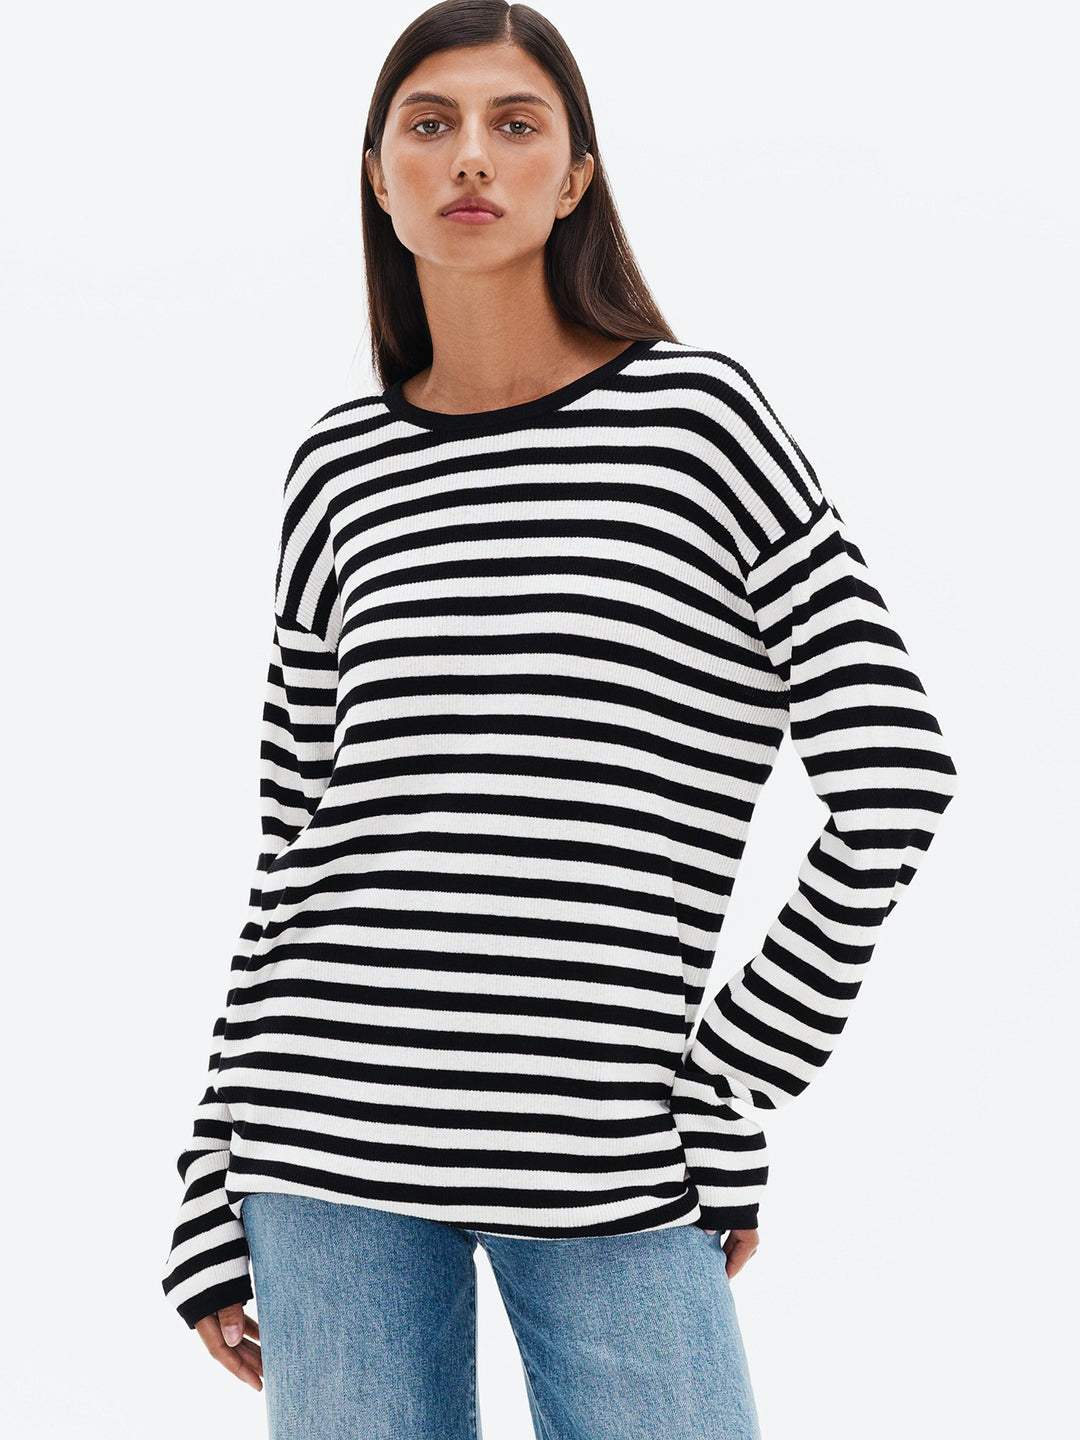 Women - Silk - Linen - Cotton - Long sleeve - Top - Black - White - Striped